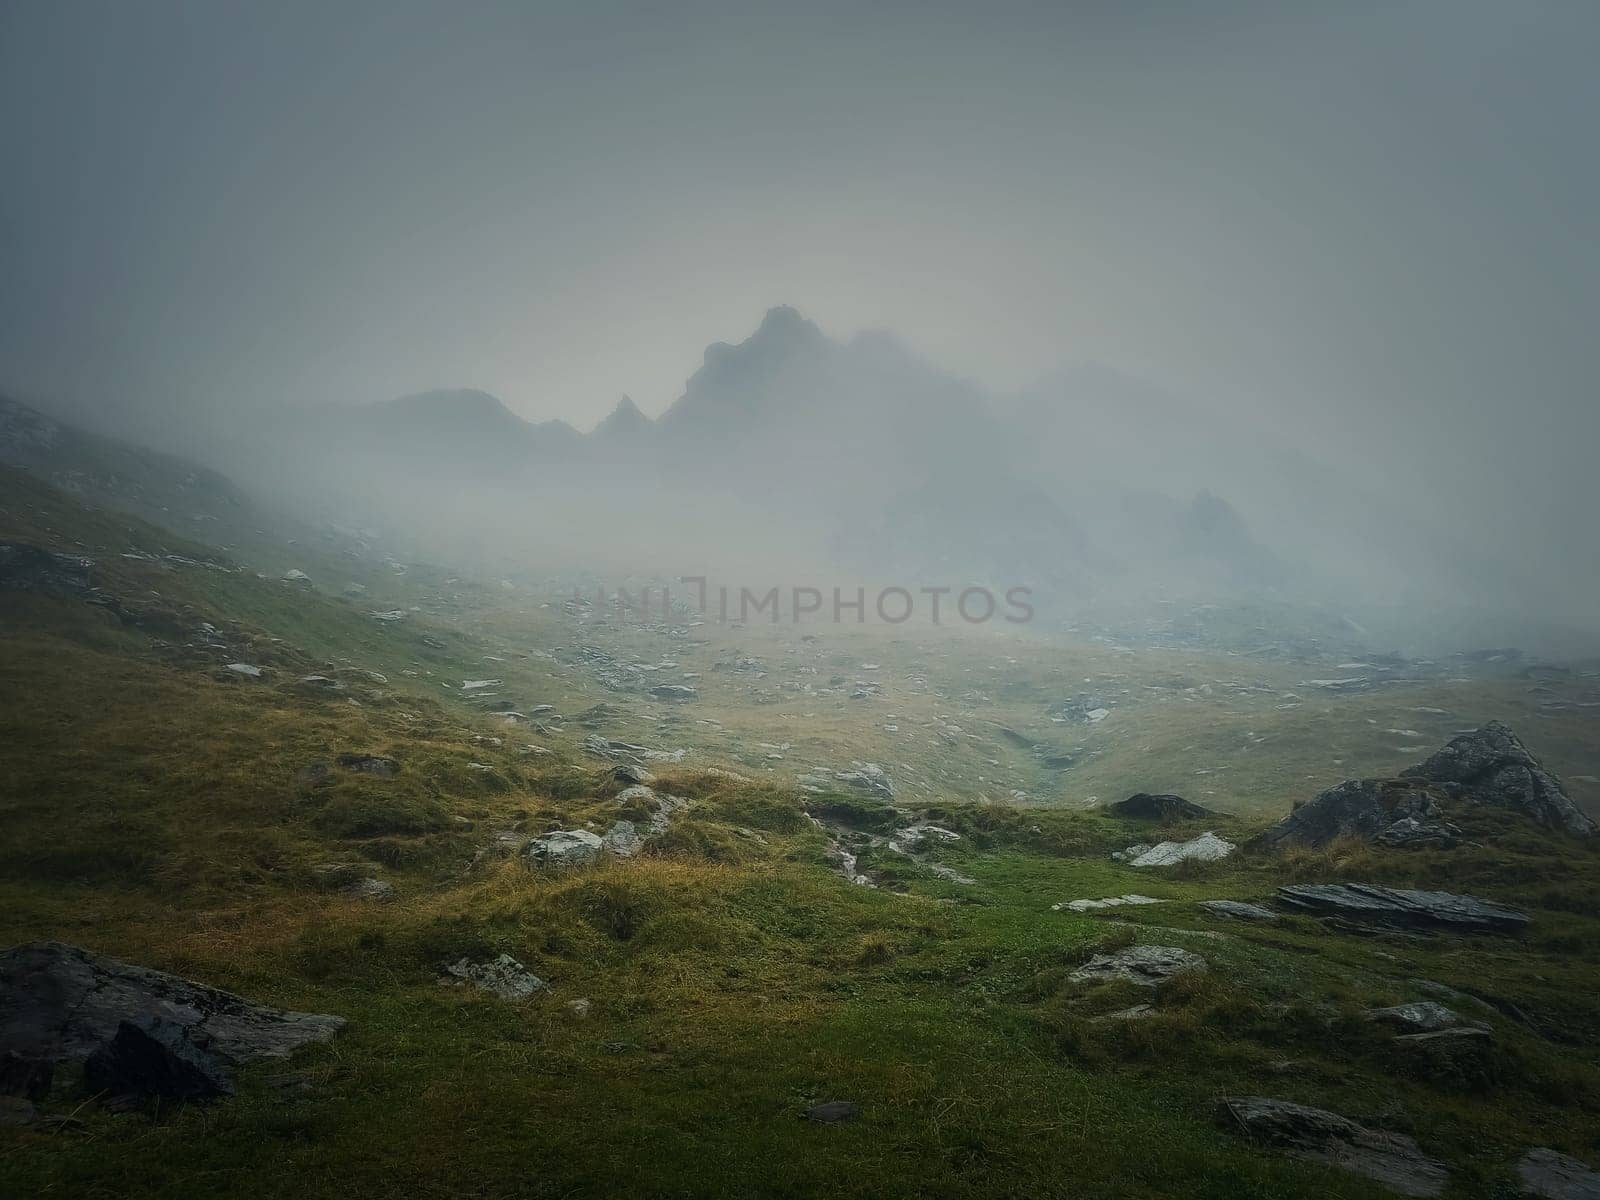 Mountain peak seen through the dense fog. Rainy scene in the mounts, hiking in the mist landscape